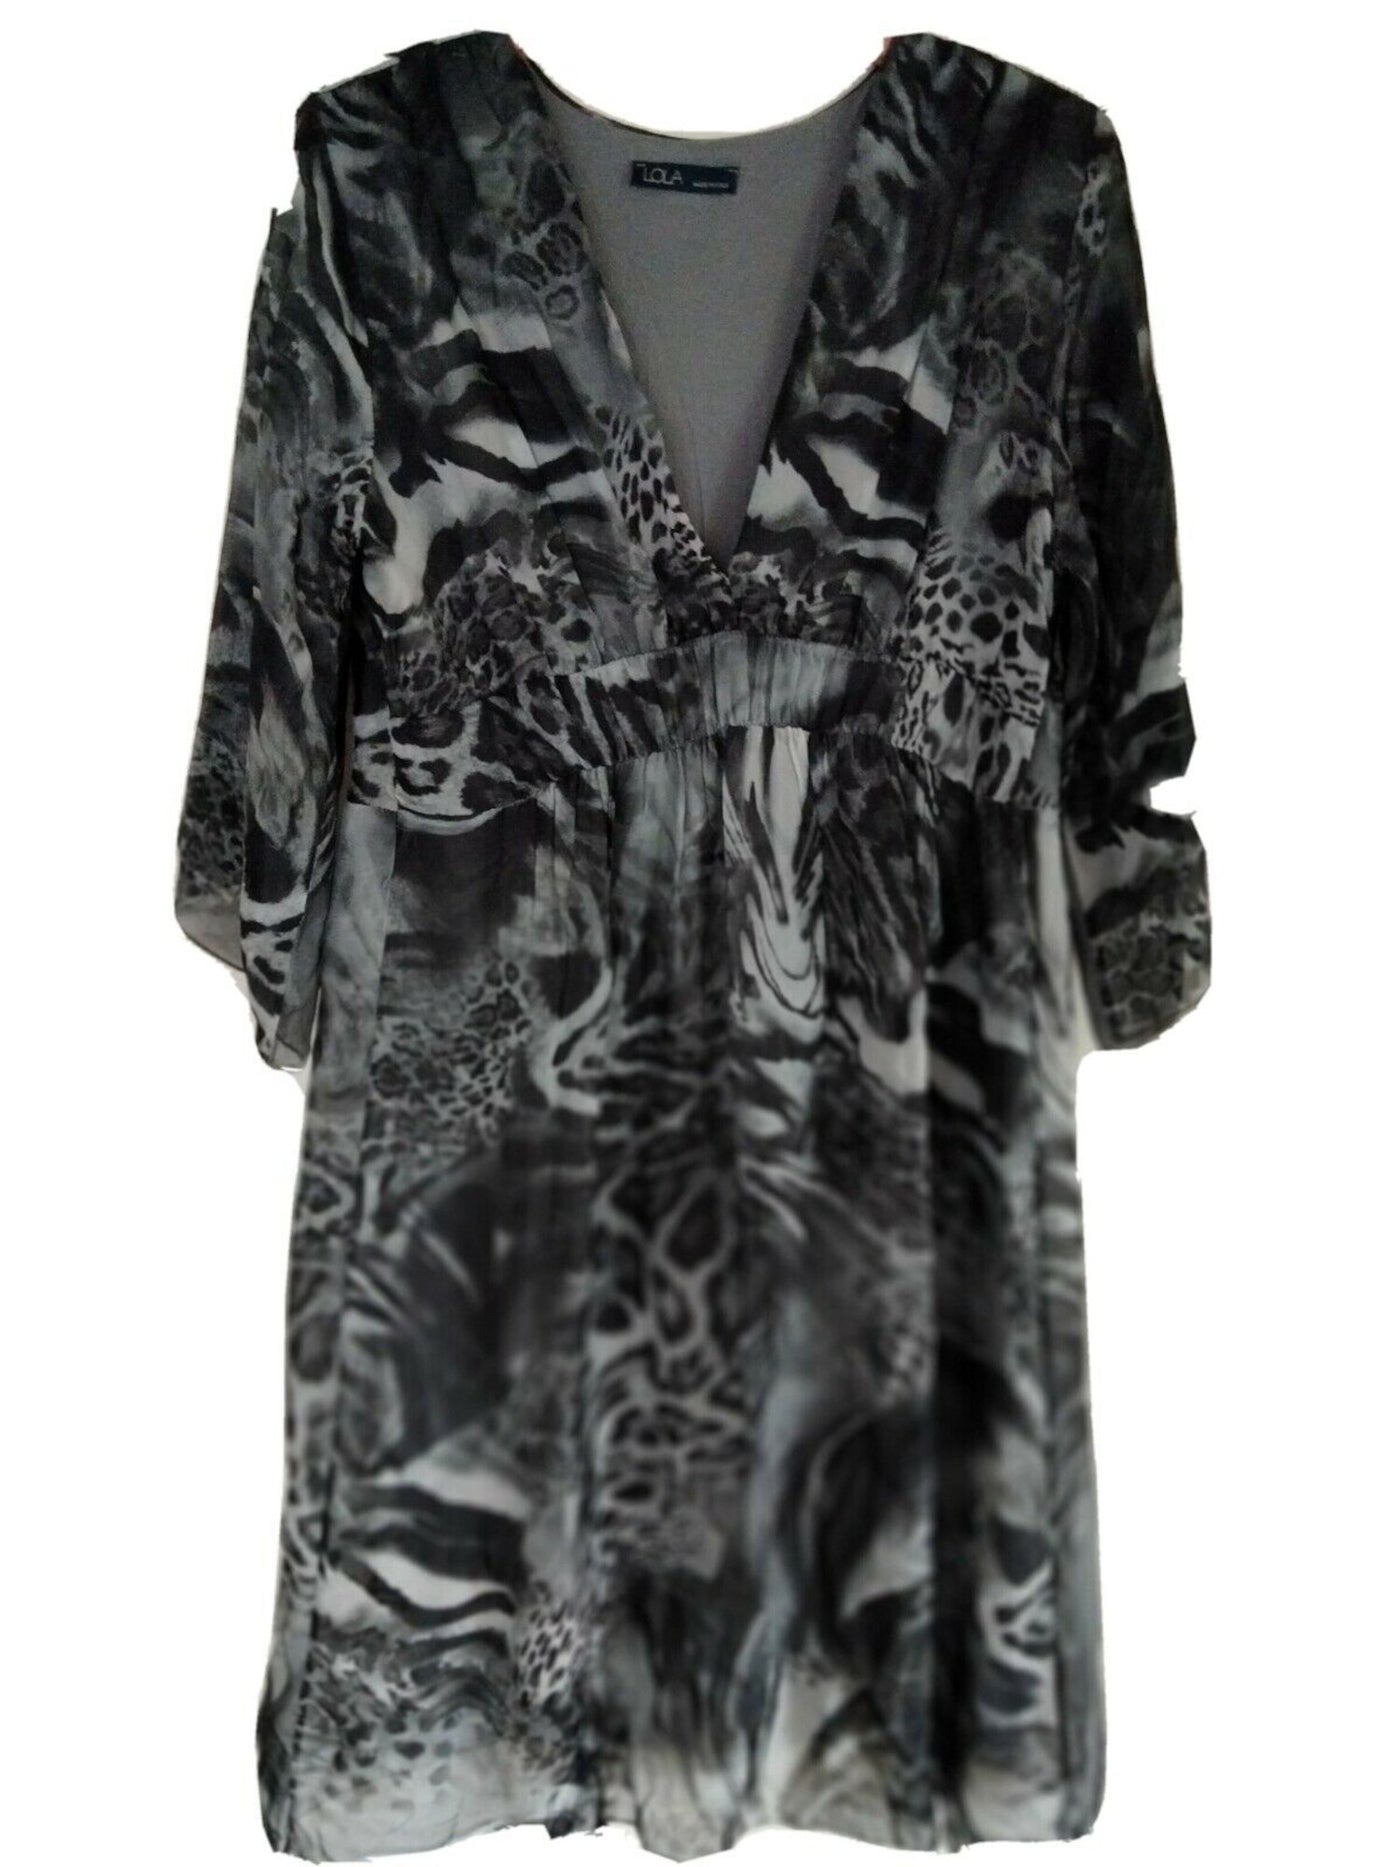 LOLA Womens Gray Animal Print Bell Sleeve V Neck Knee Length Evening Dress S